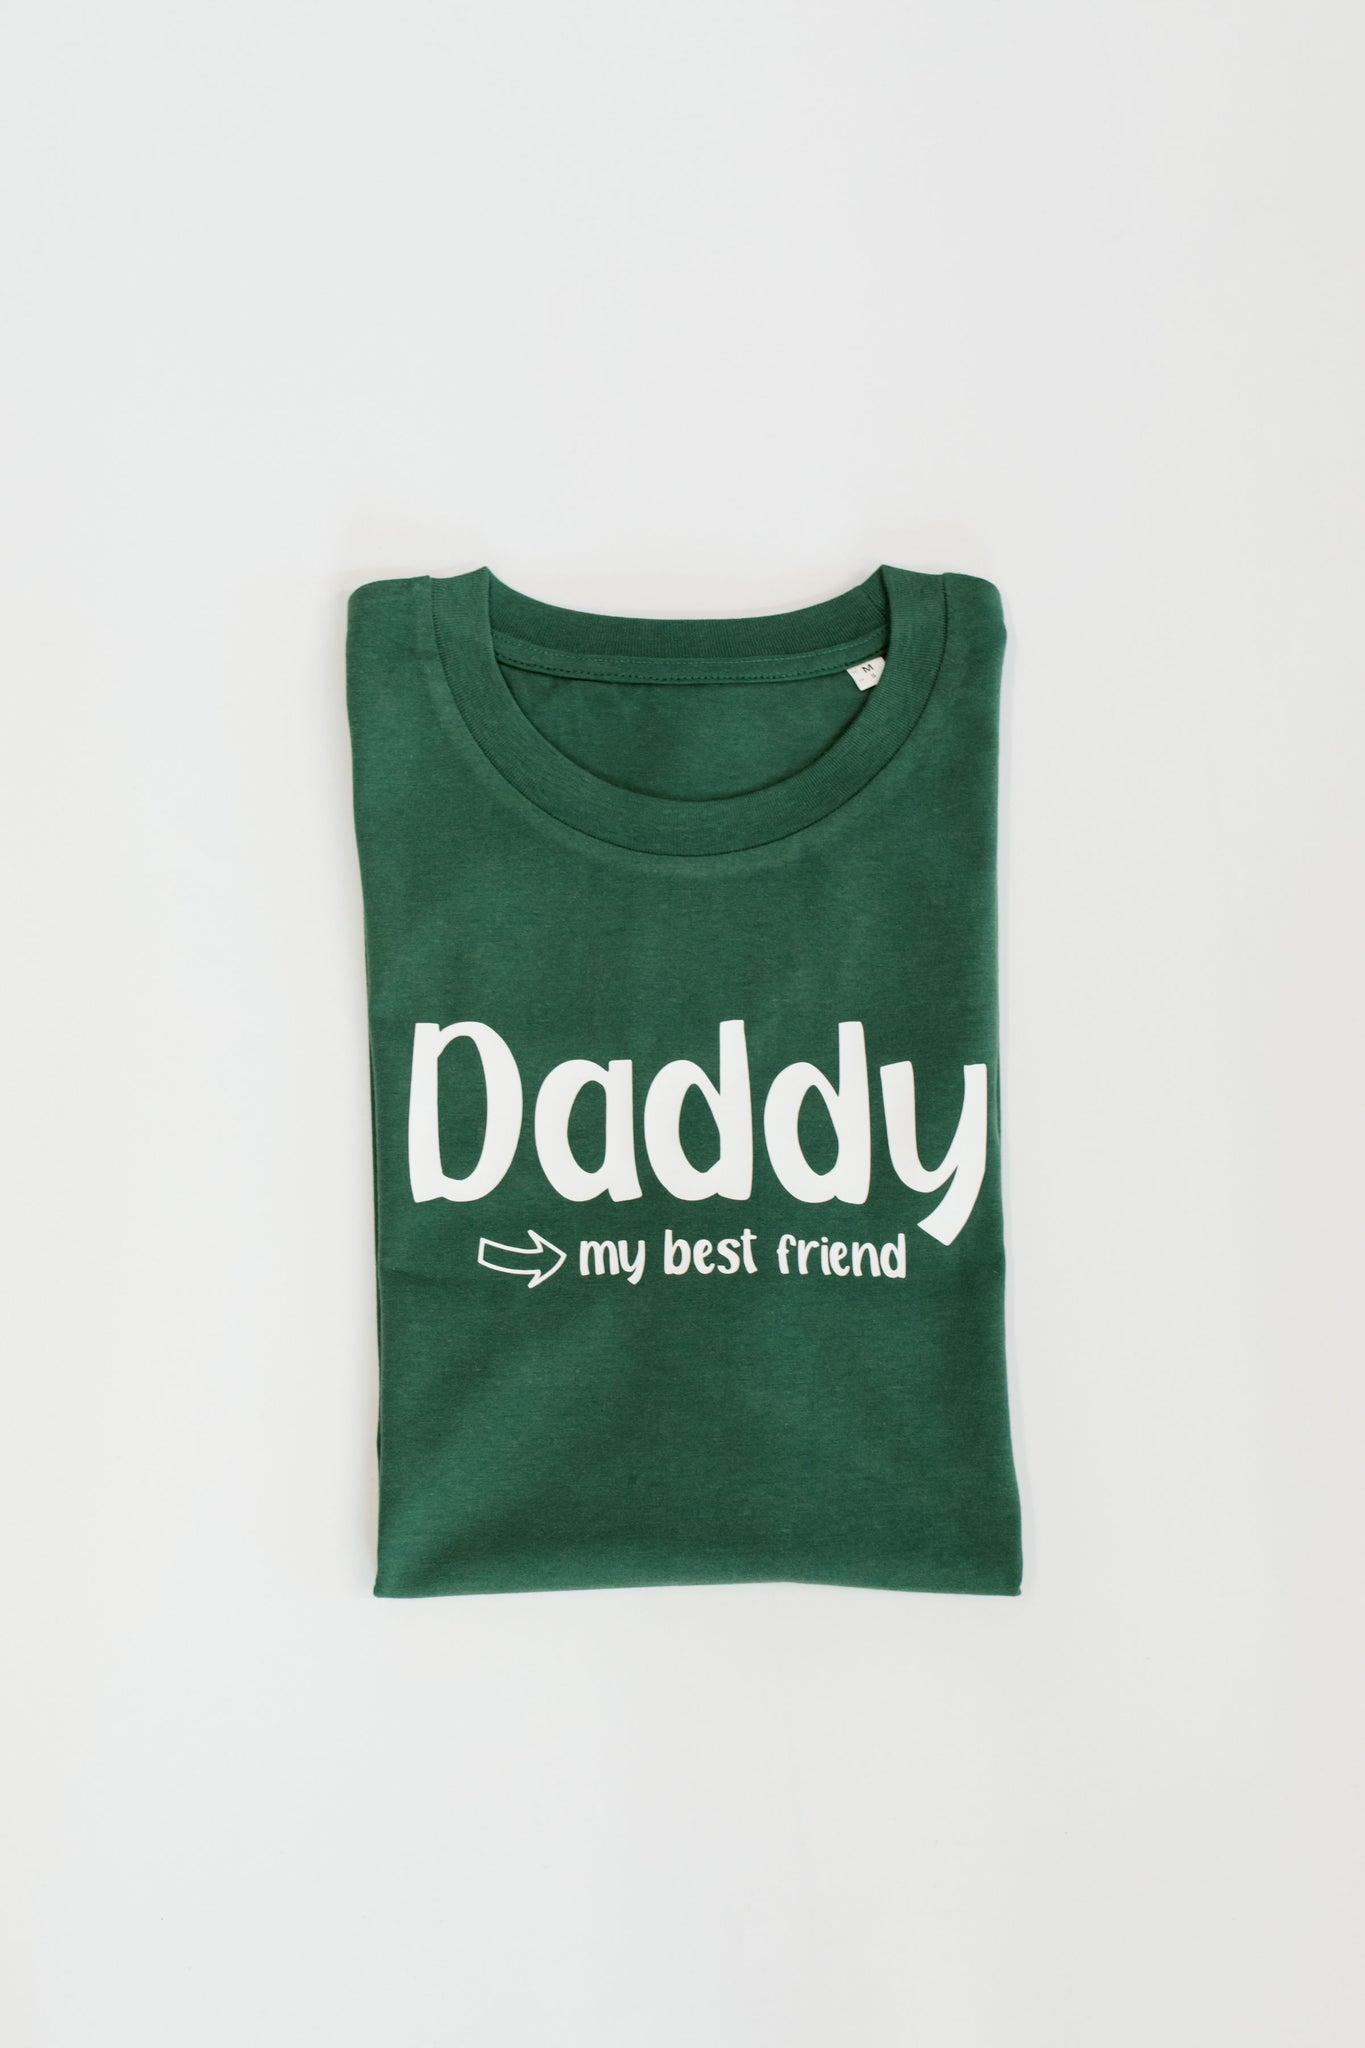 Daddy my Best Friend Hoodie, Sweatshirt or T-shirt